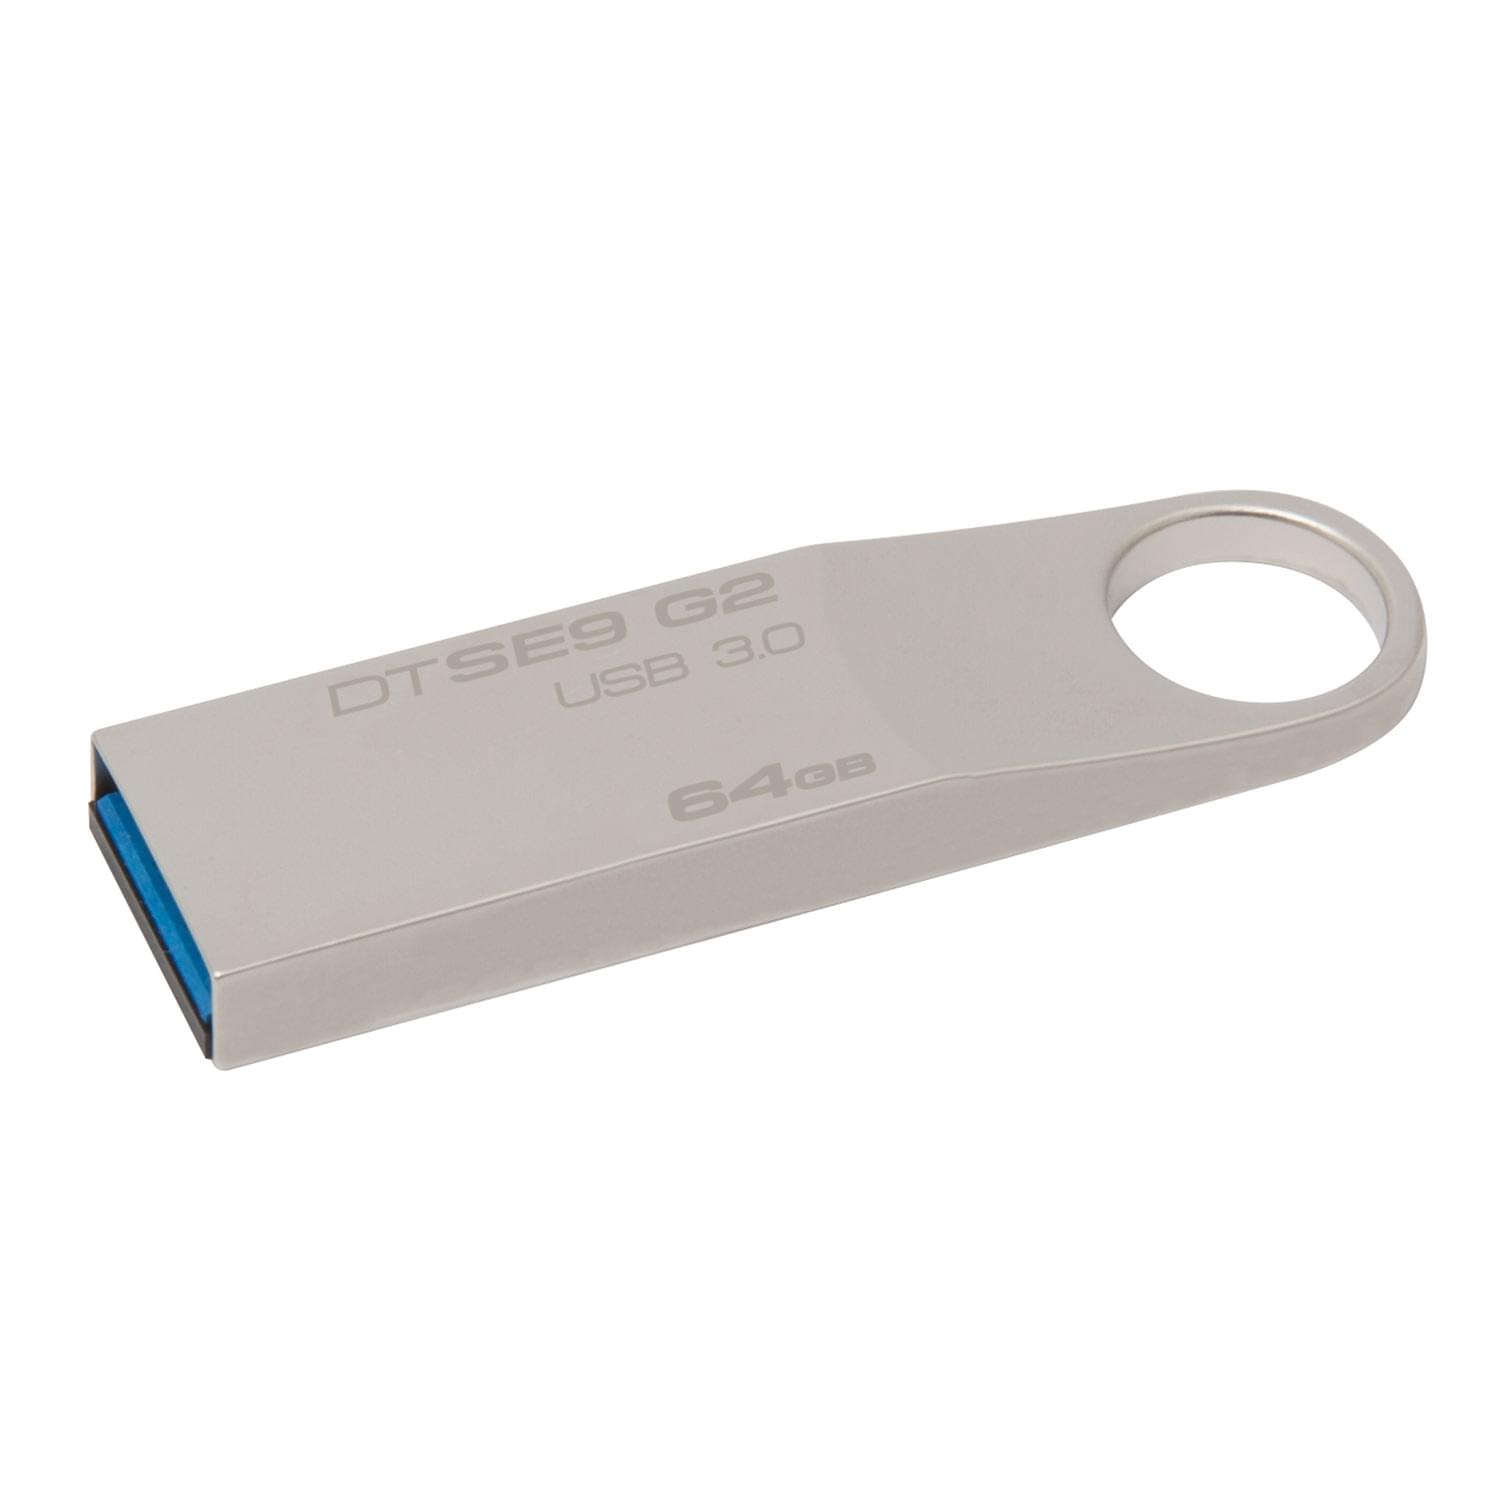 Clé USB Kingston Clé 64Go USB 3.0 SE9 G2 DTSE9G2/64GB (metal)